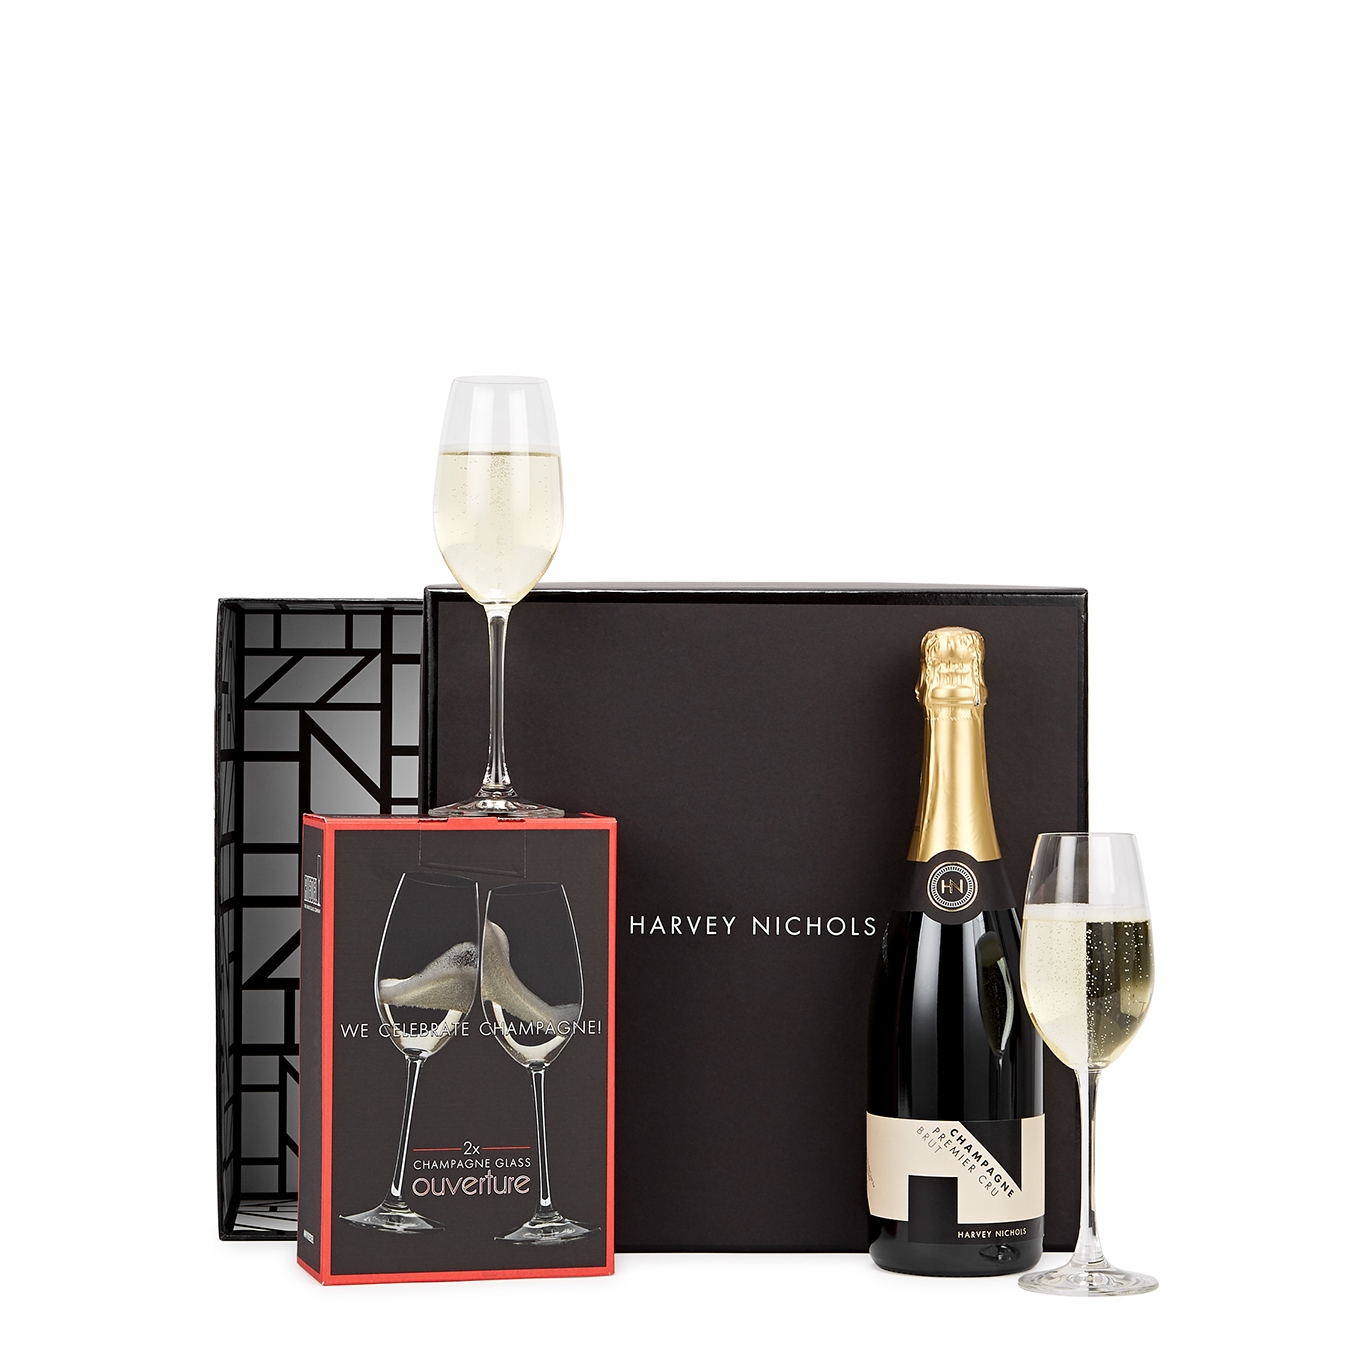 Harvey Nichols Raise a Toast Gift Box, Hamper, Premier cru Brut Sparkling Wine